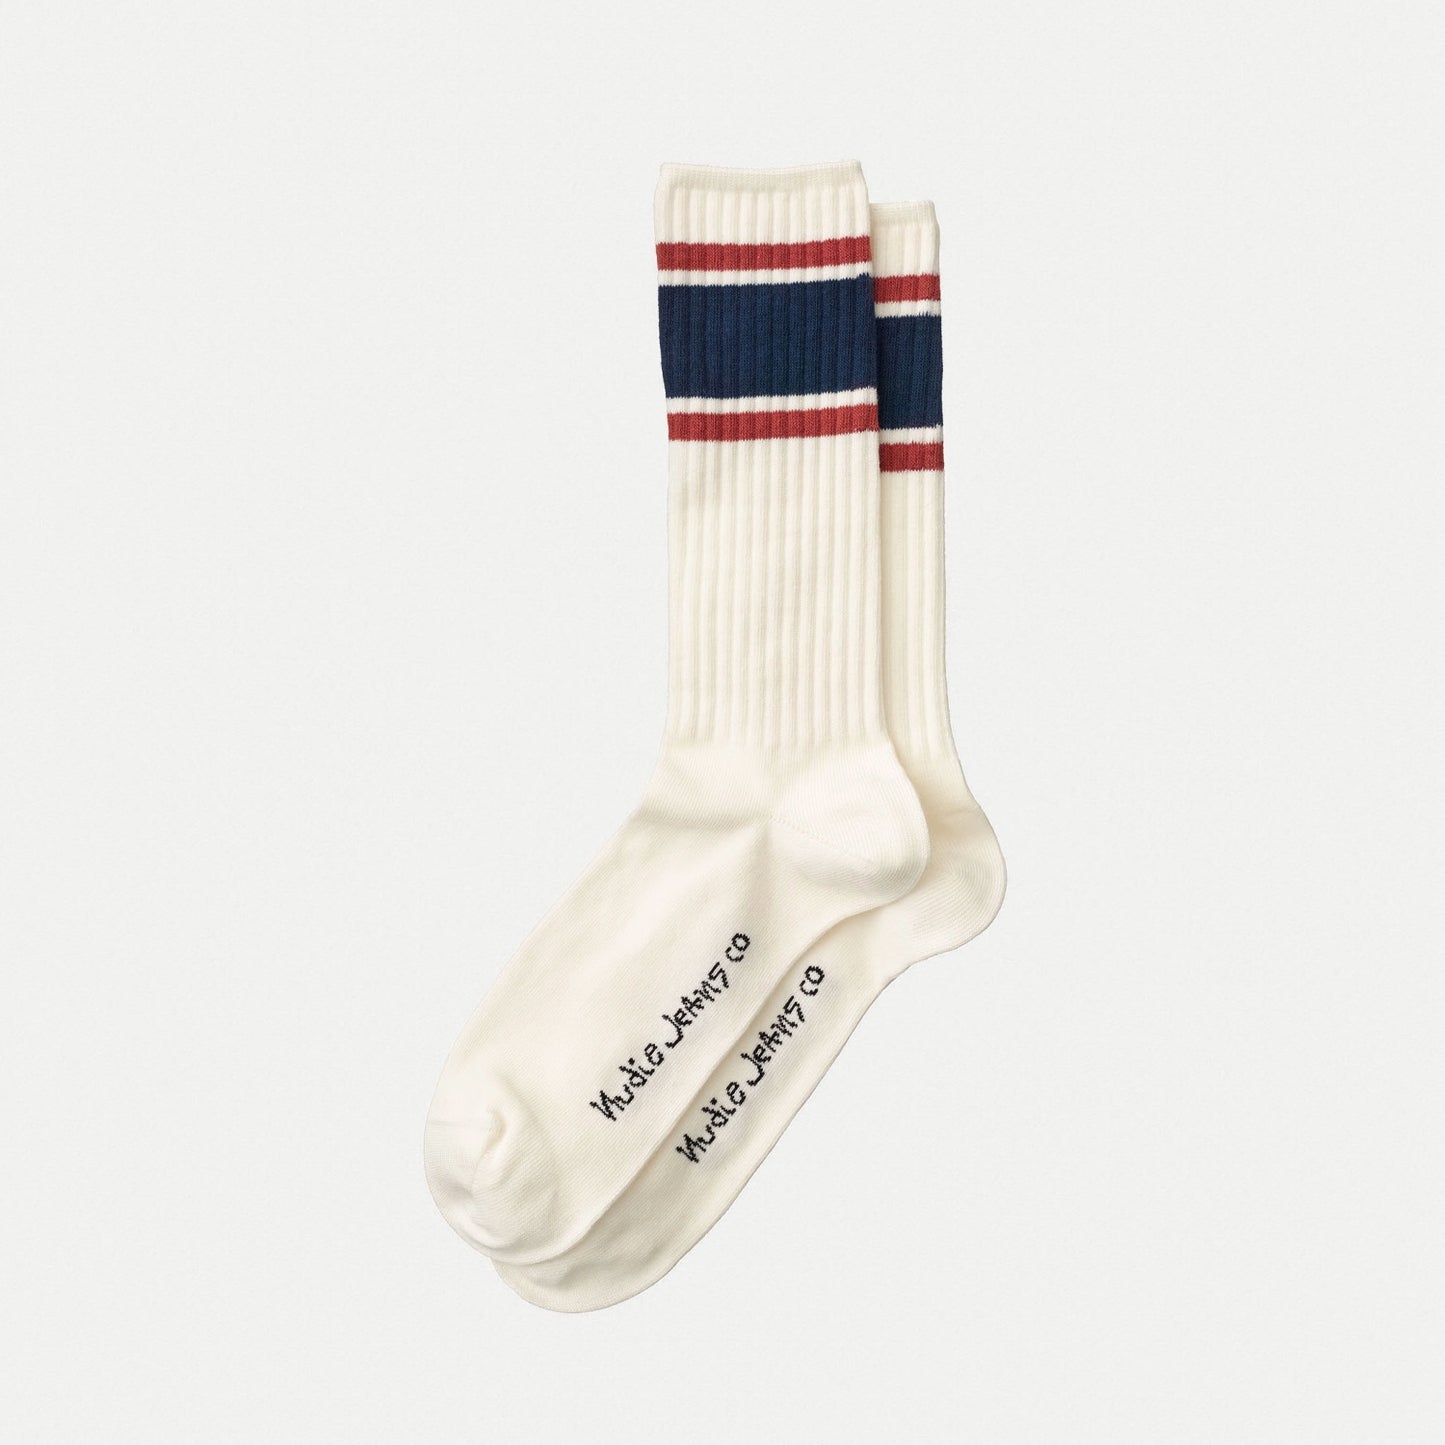 Nudie - Amundsson Sport Socks - Off White / Navy / Red